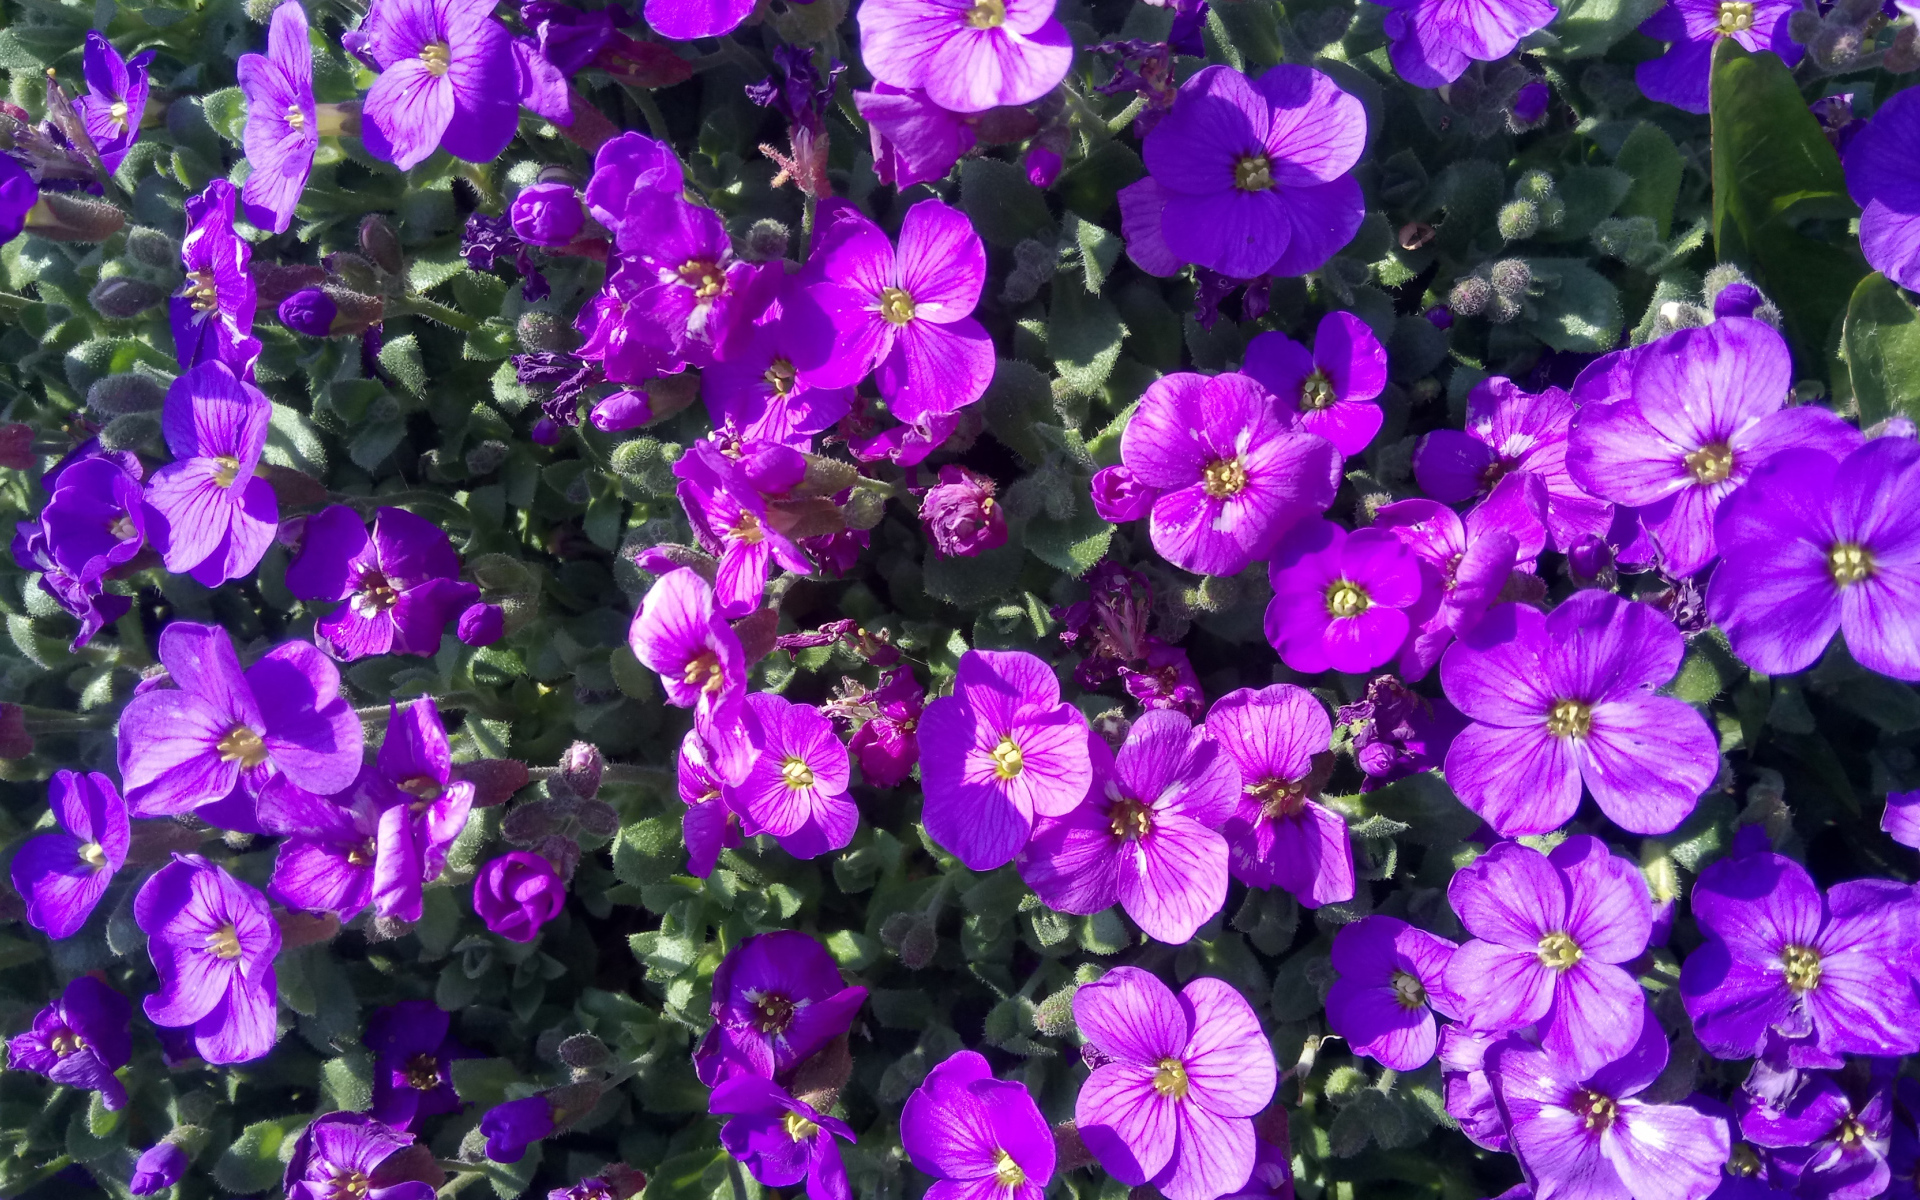 Small lilac Aubrieta flowers in the sun